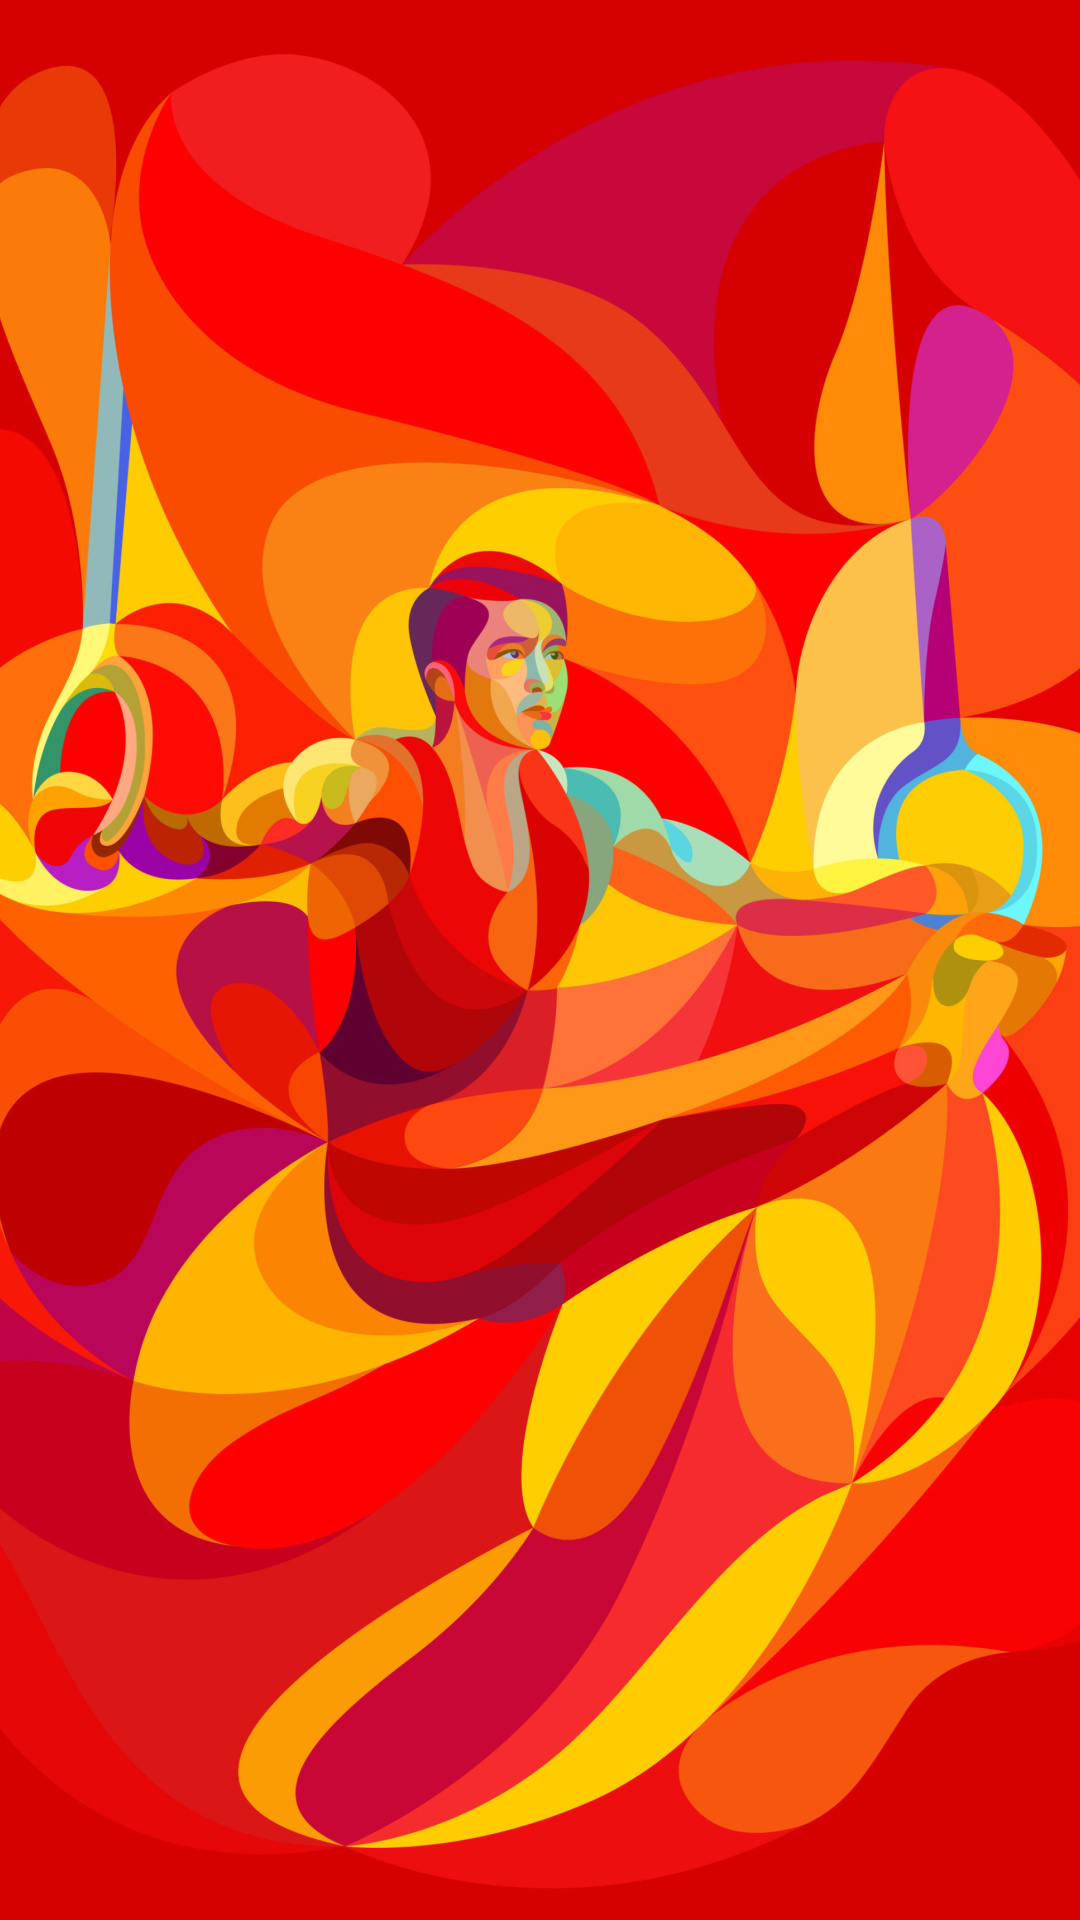 Rio 2016 Olympics Gymnastics wallpaper 1080x1920